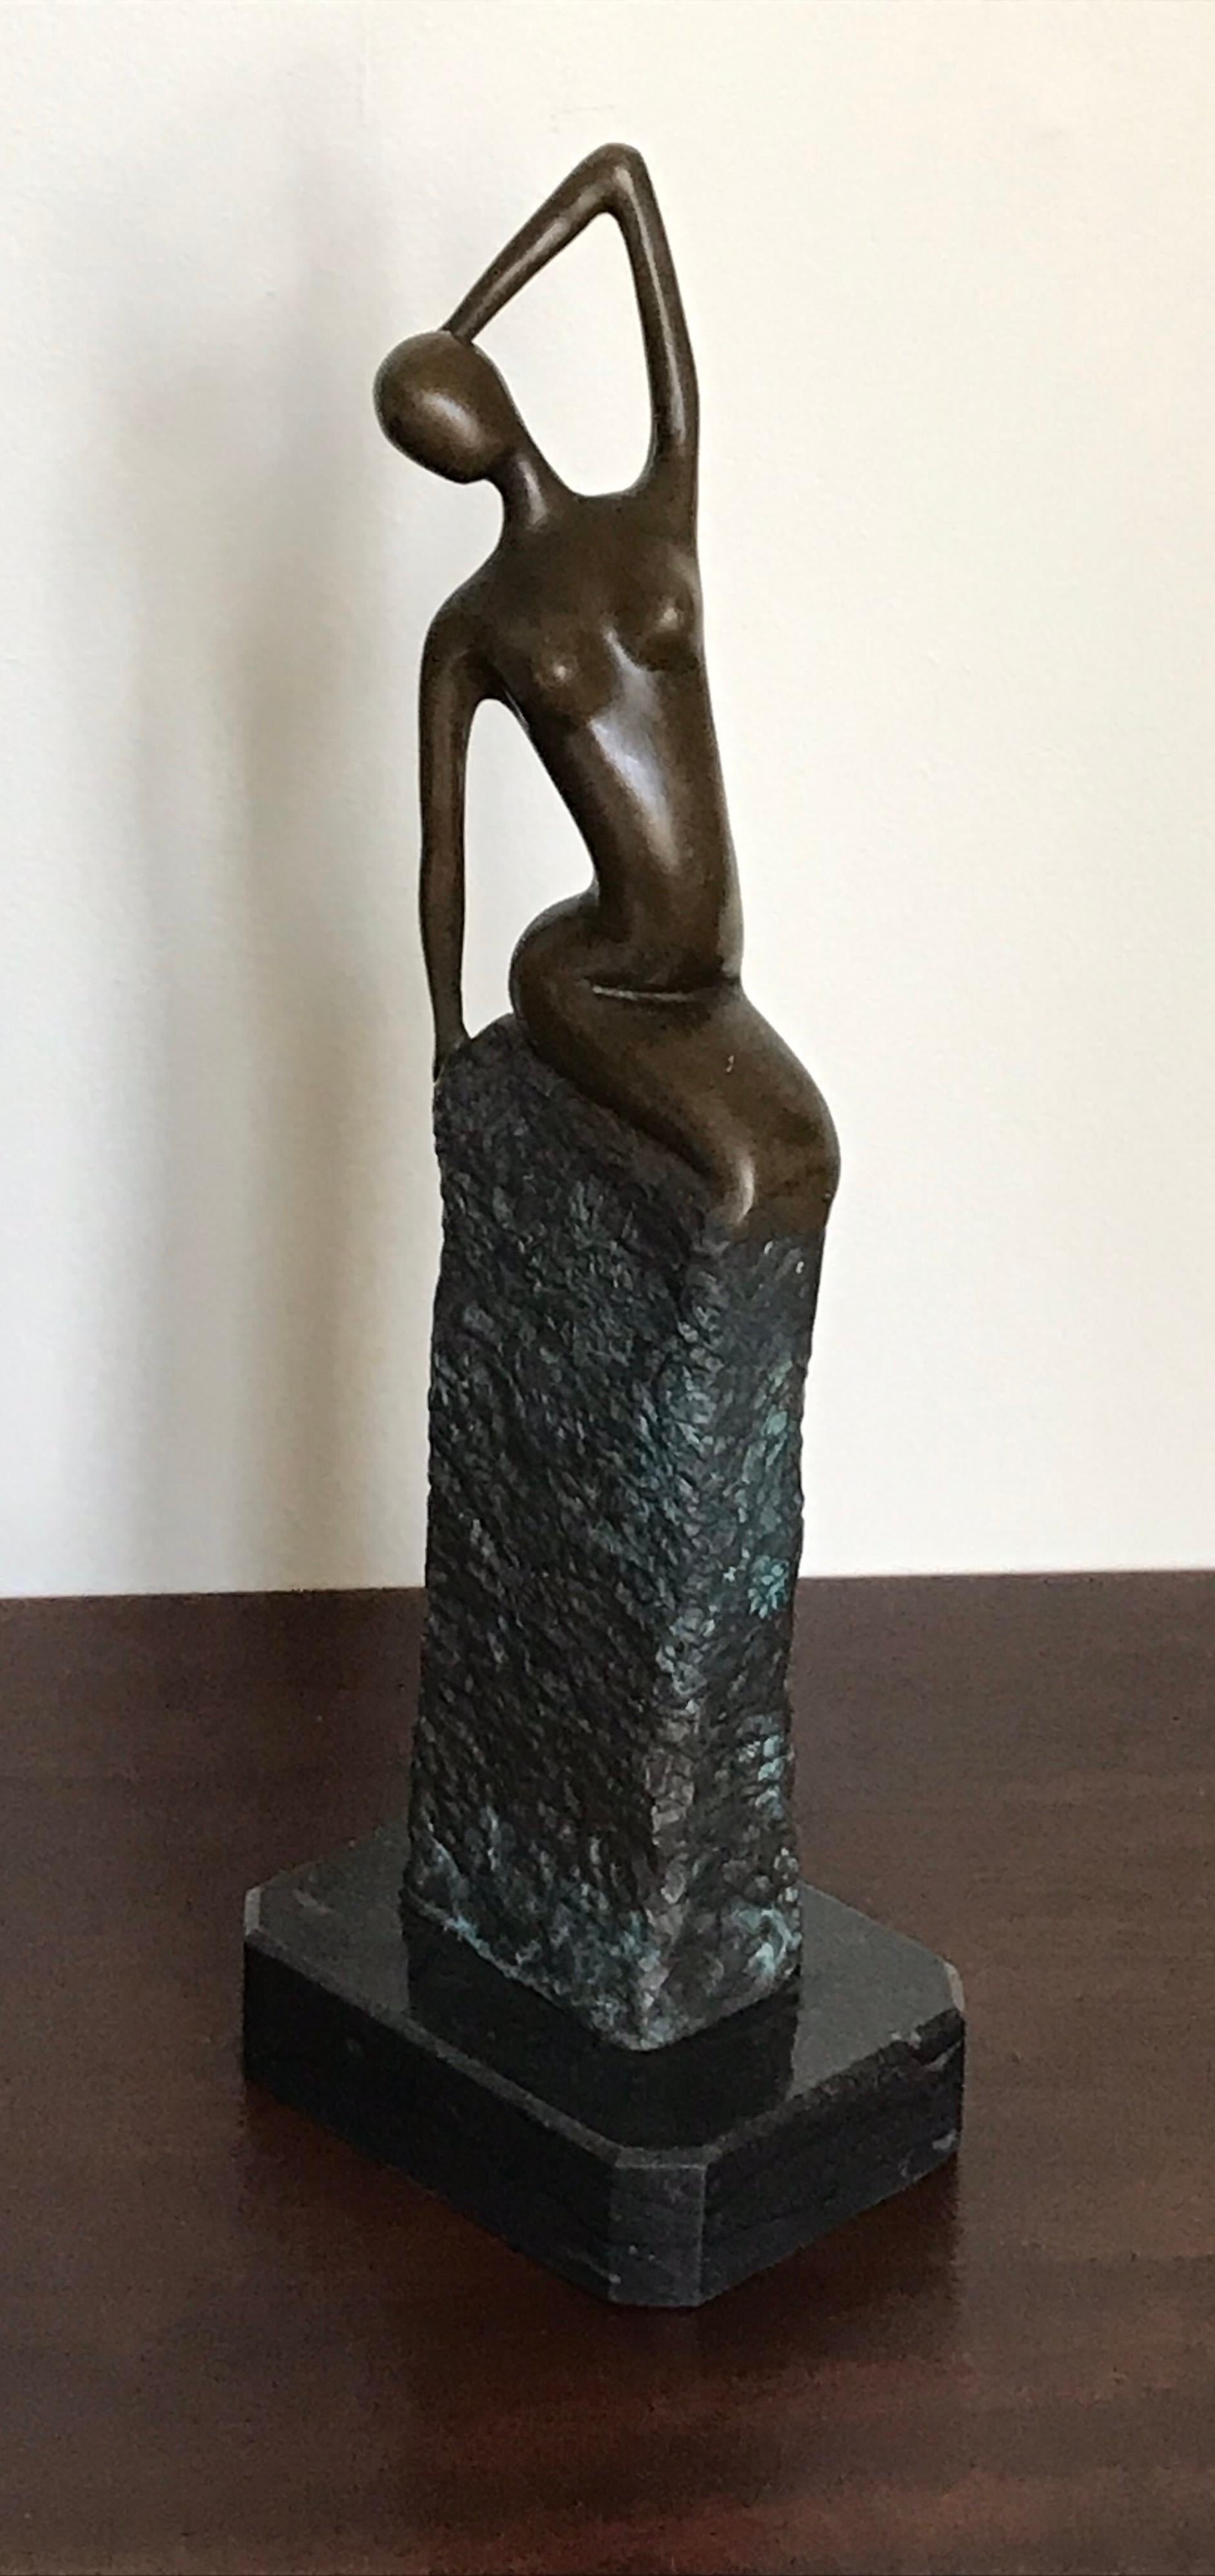 Very nice bronze nude female figurine sculpture by Aldo Vitaleh, Italy. Beautiful nude woman atop bronze pedestal. Signed by the artist.